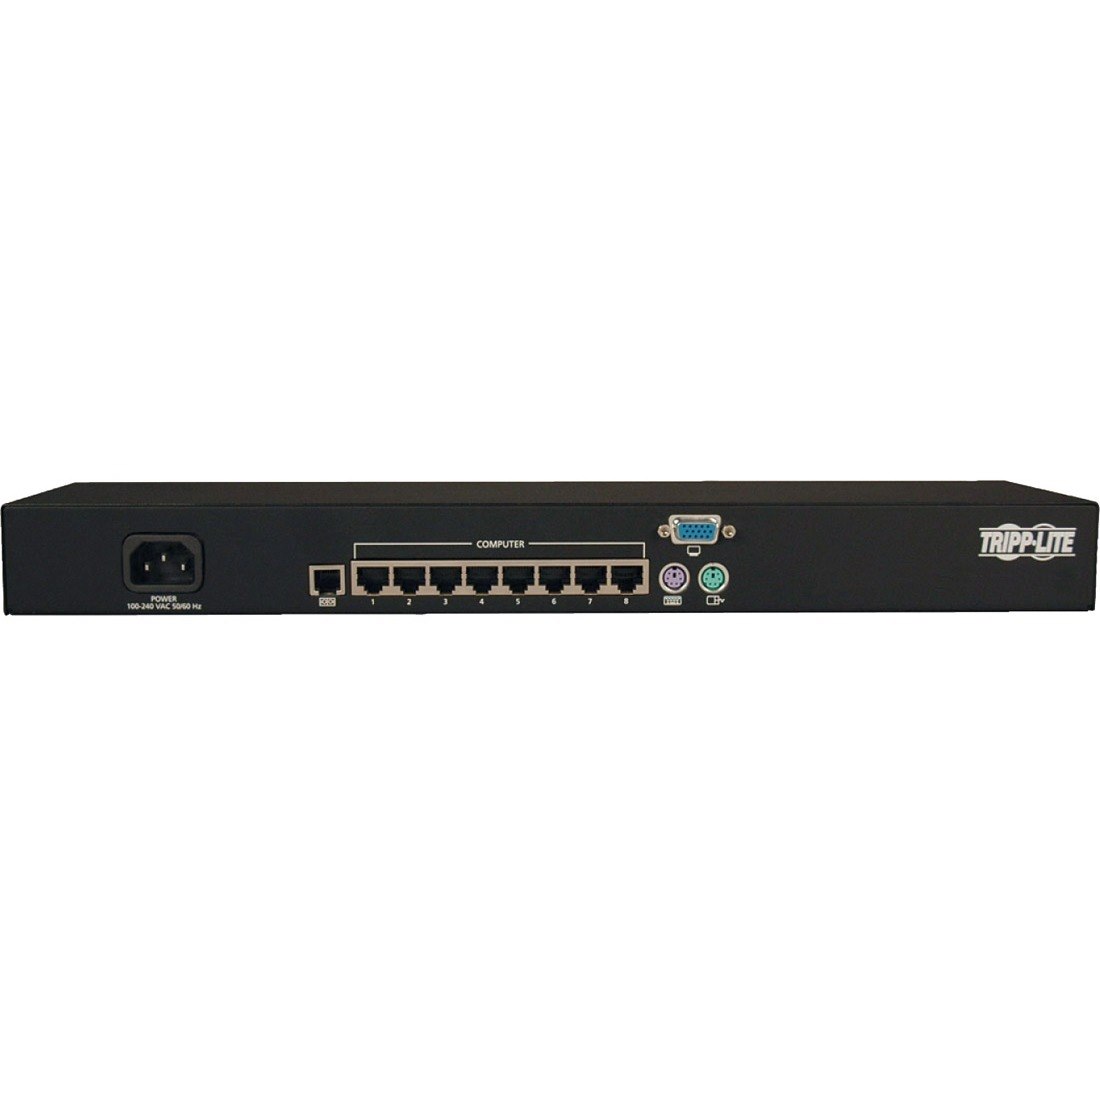 Tripp Lite by Eaton NetCommander 8-Port Cat5 KVM Switch 1U Rack-Mount with PS2 to USB Input Adapter